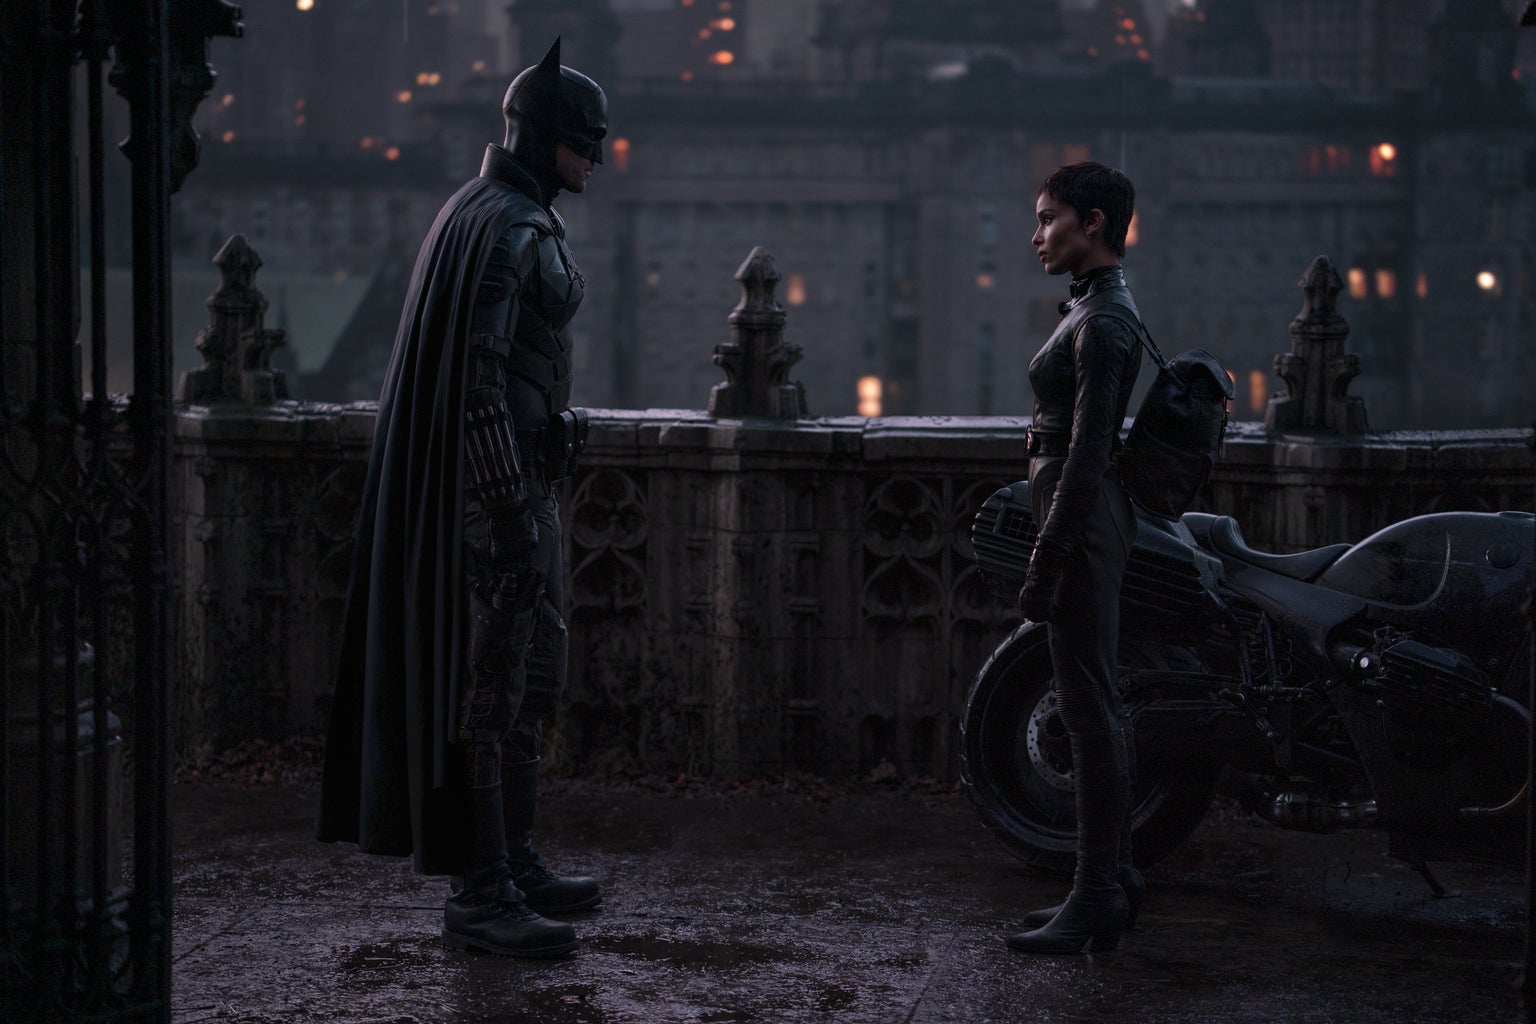 ROBERT PATTINSON as Batman and ZOË KRAVITZ as Selina Kyle in “THE BATMAN”